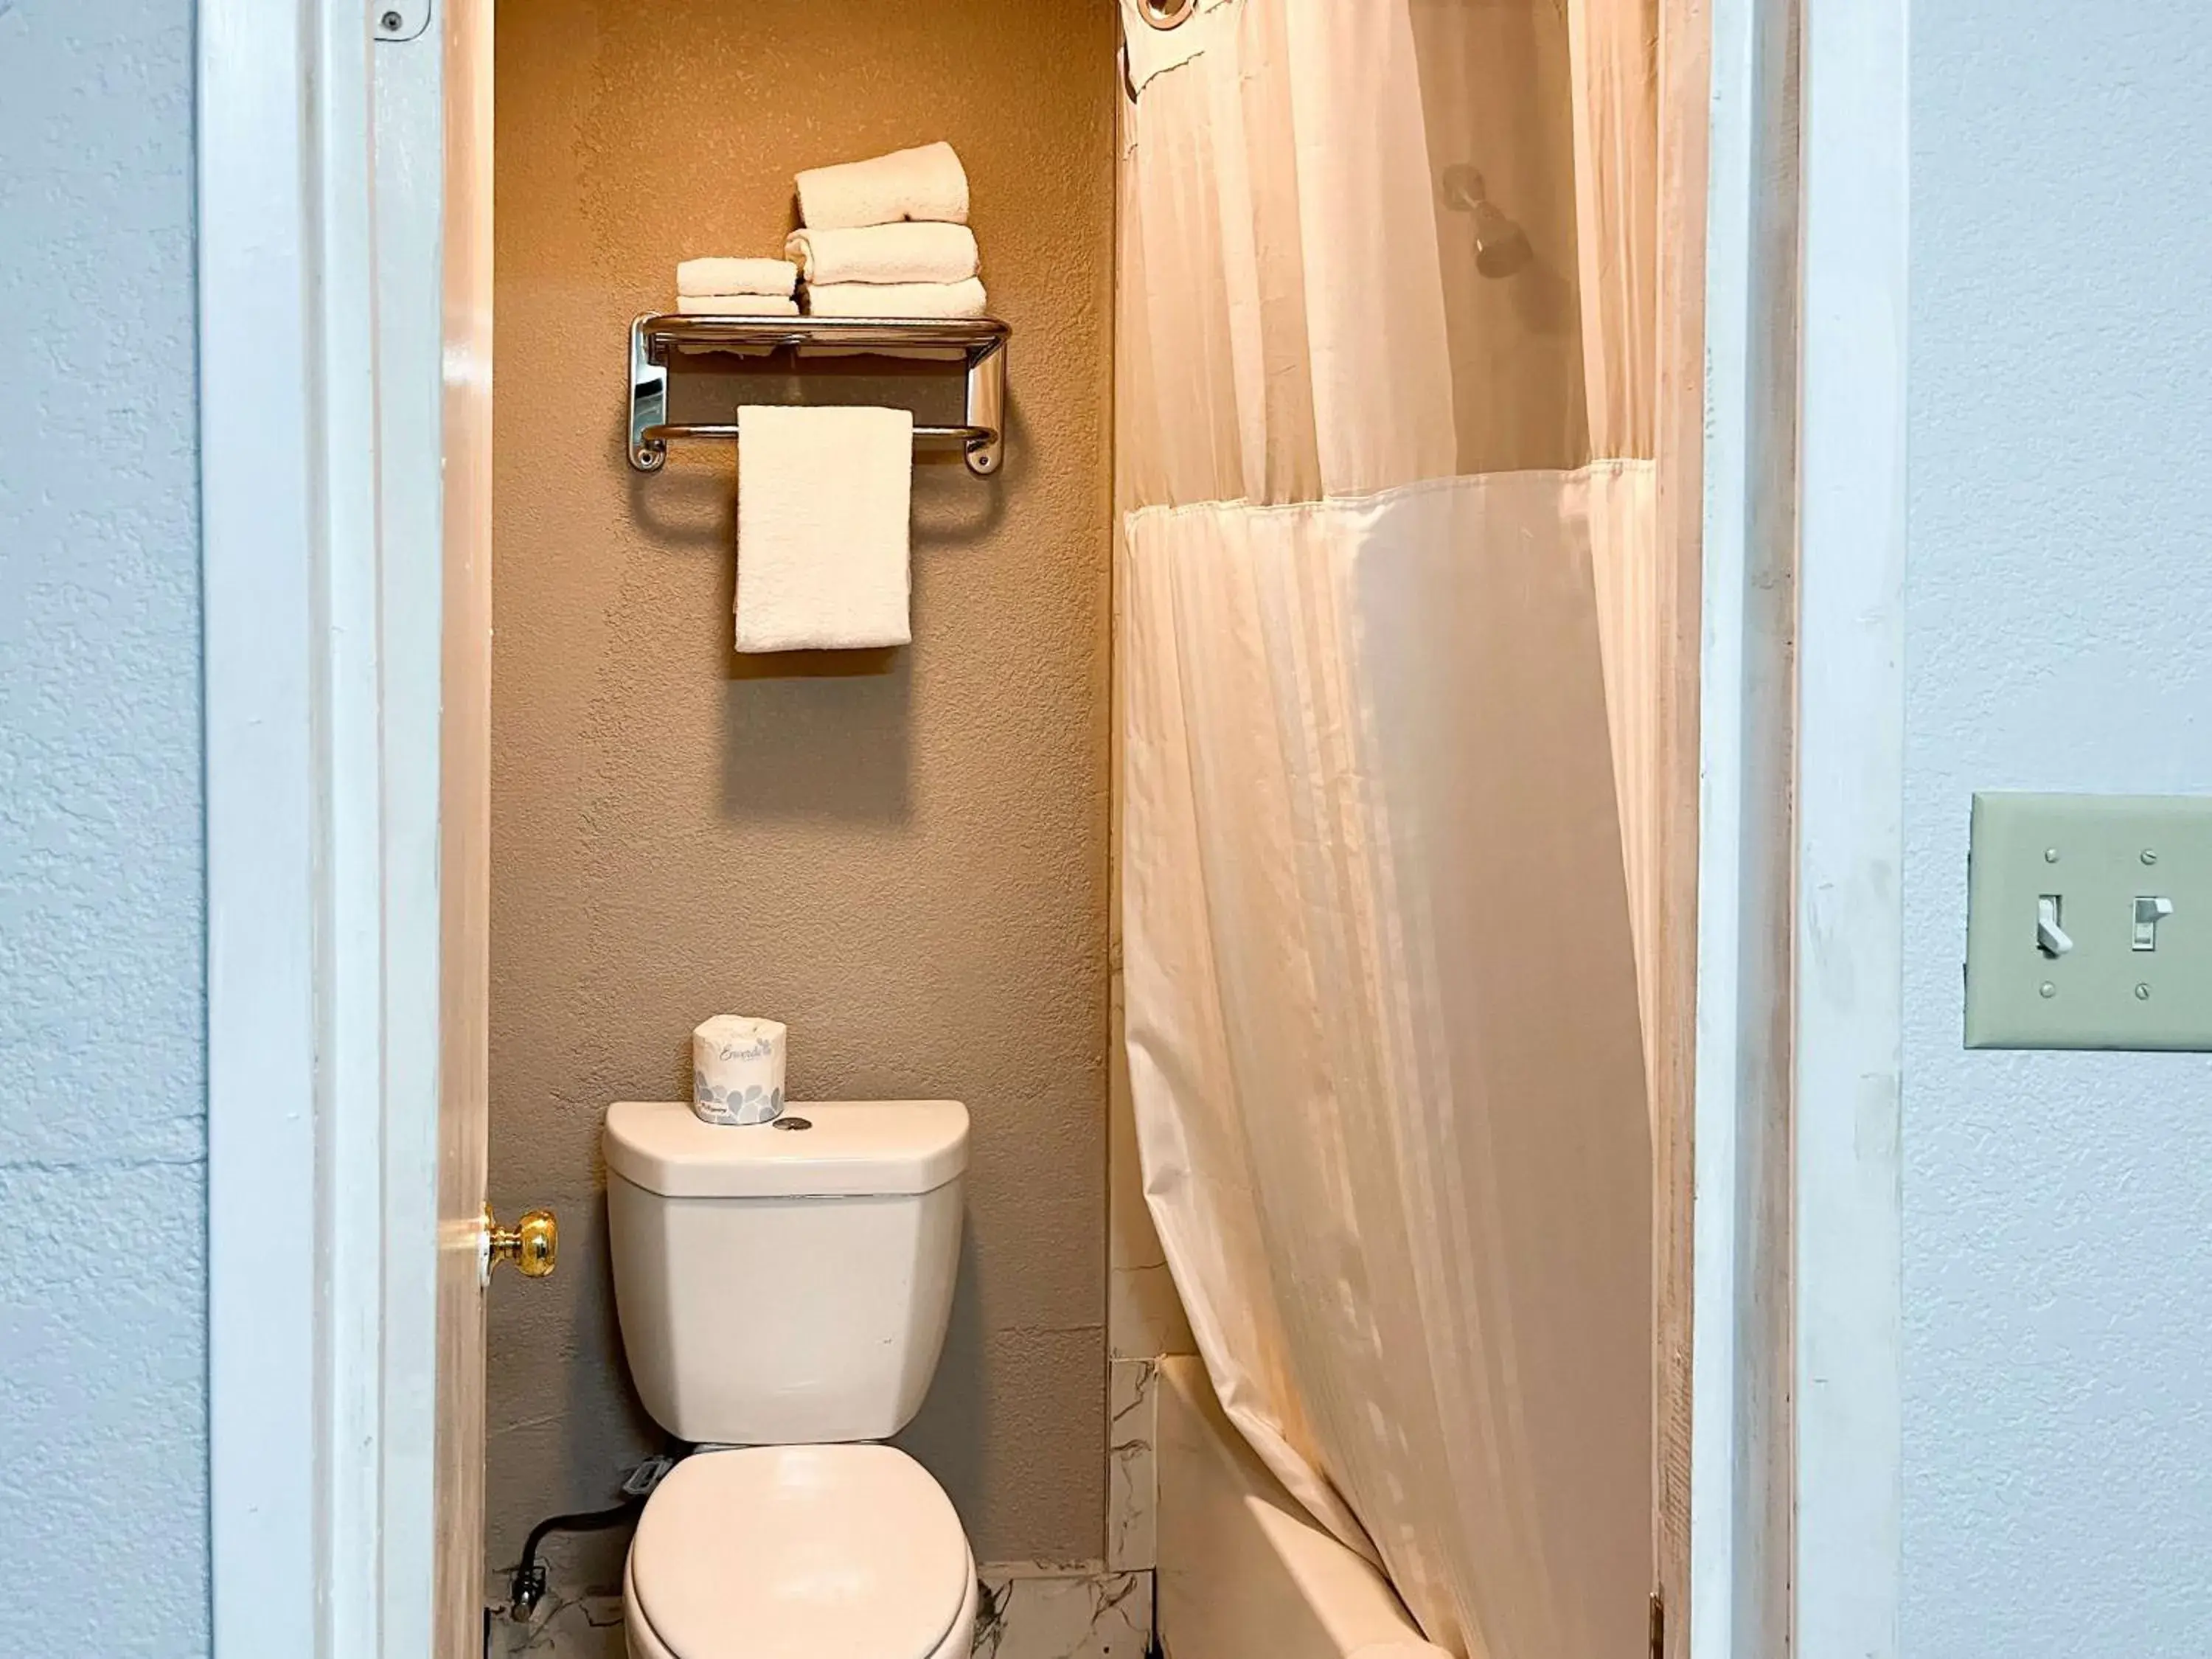 Bathroom in Studio 6 Suites Delano, CA